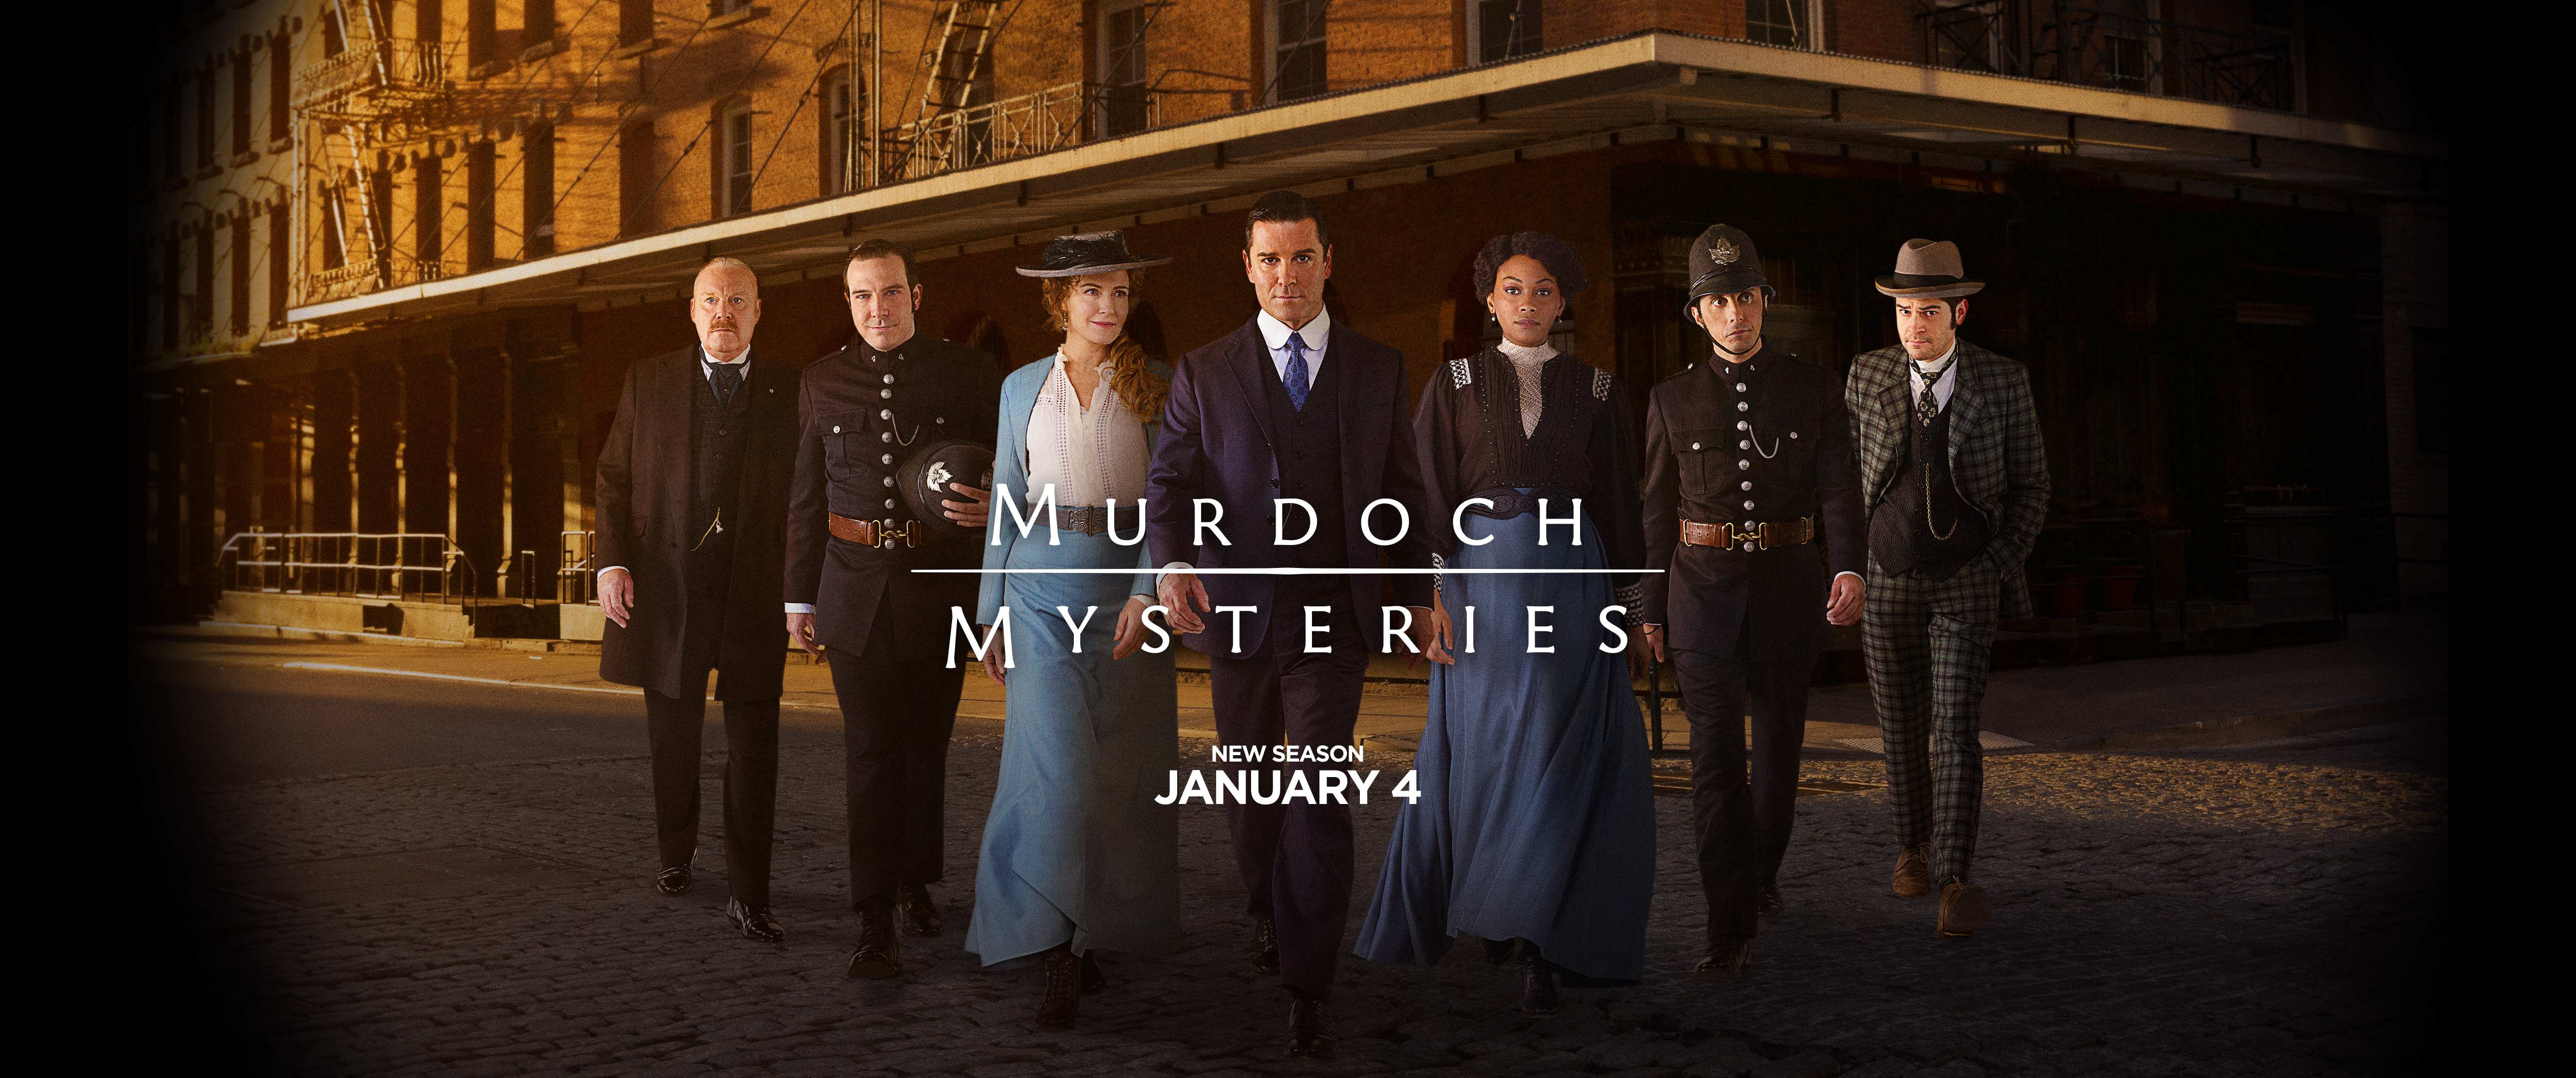 The cast of Murdoch Mysteries walk down a street at sunrise side by side, with Murdoch in the lead.